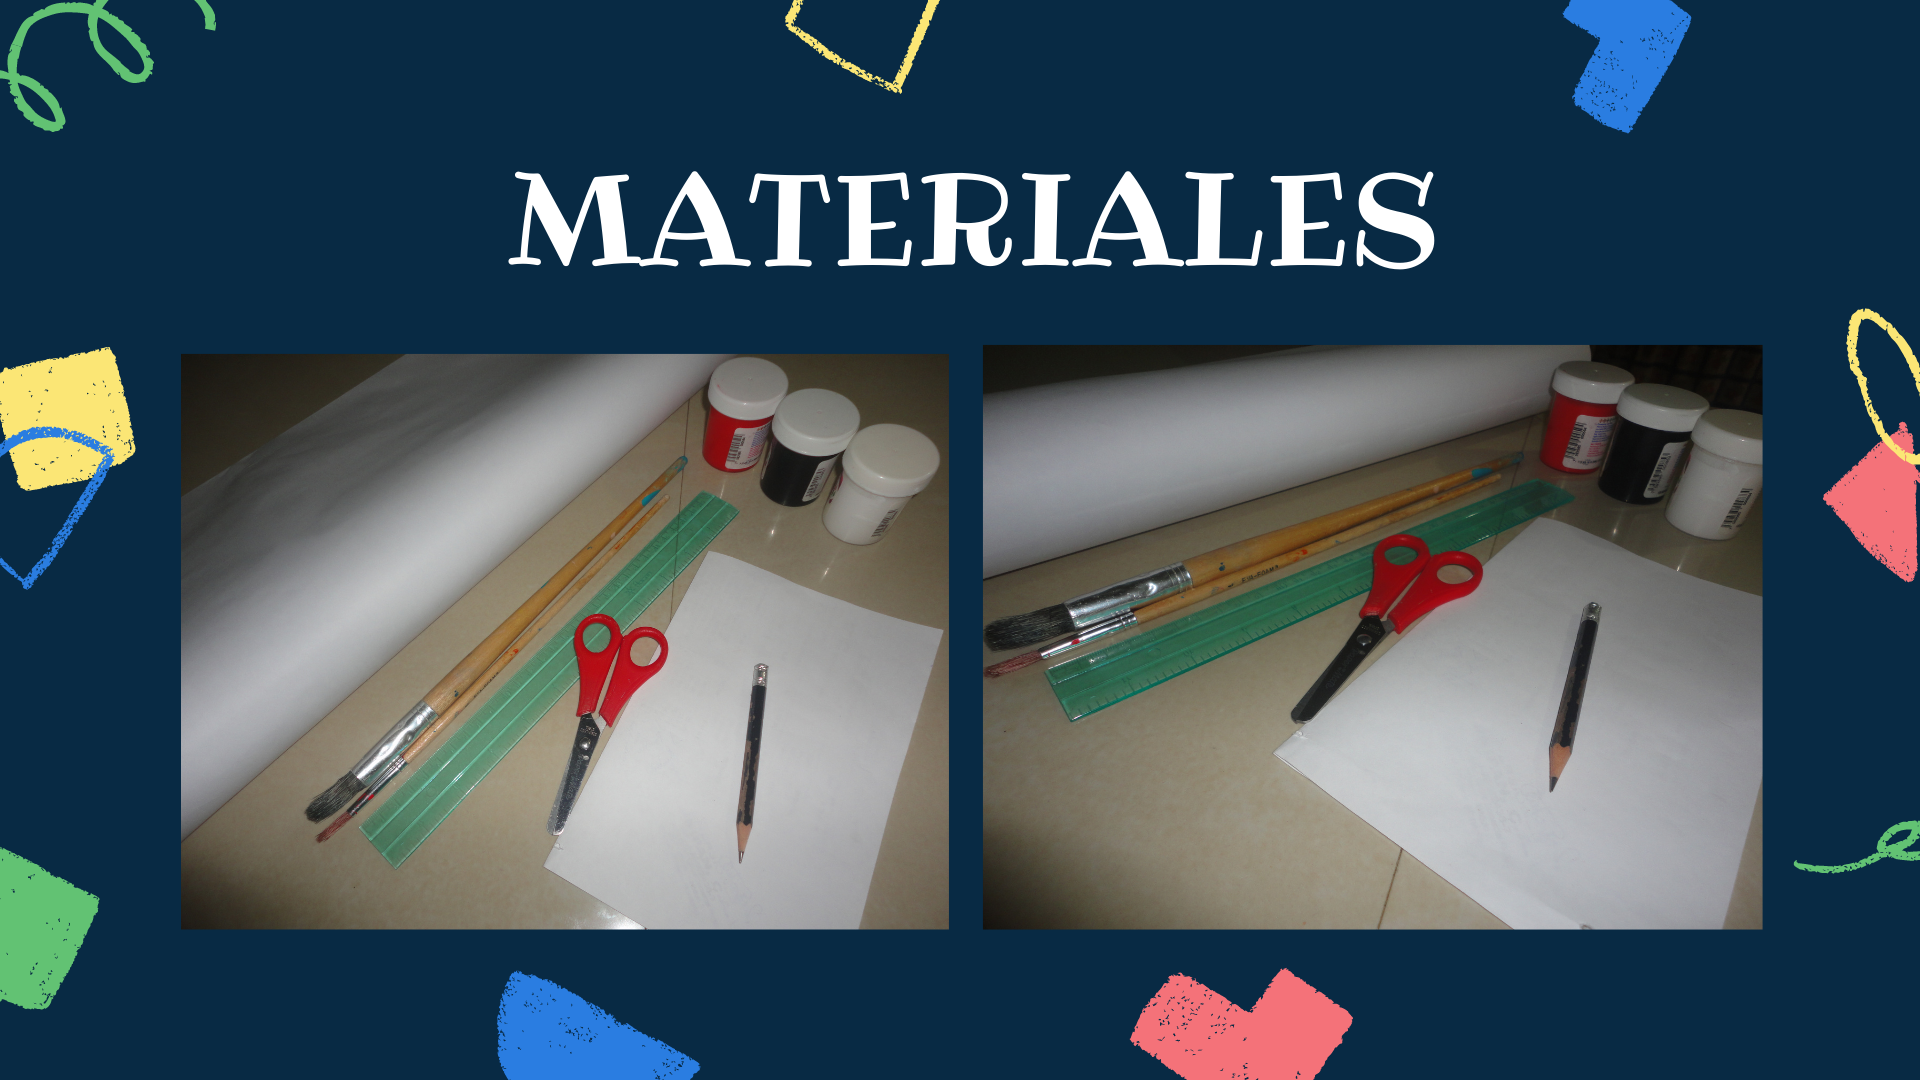 Materiales (.png